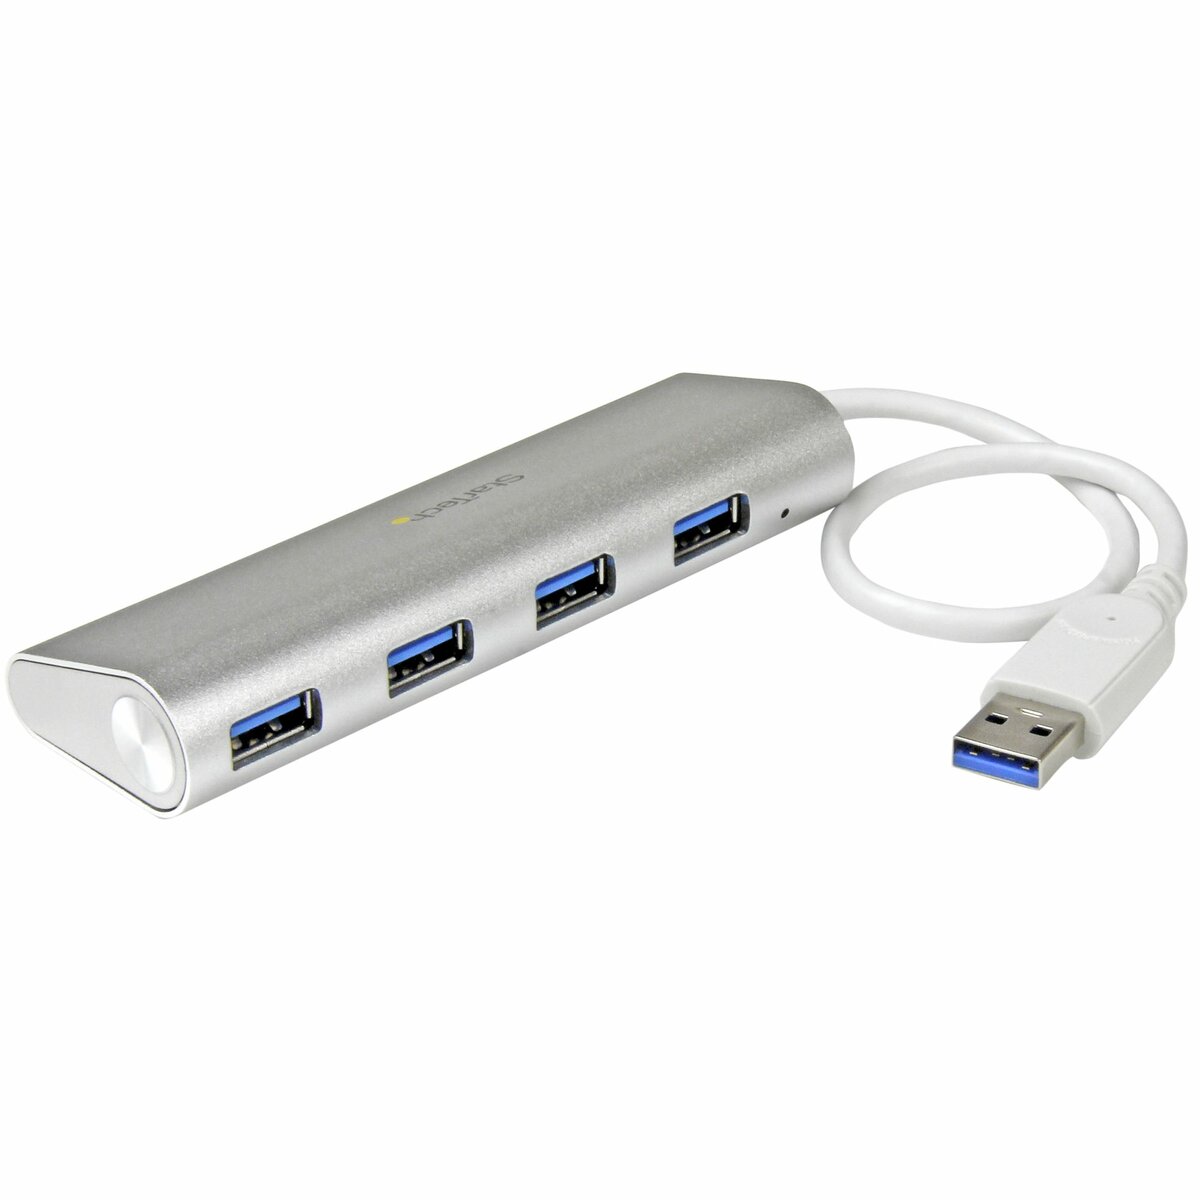 forbi Berolige Bryde igennem Shop | StarTech.com 4 Port Portable USB 3.0 Hub w/ Built-in Cable - Travel USB  Hub